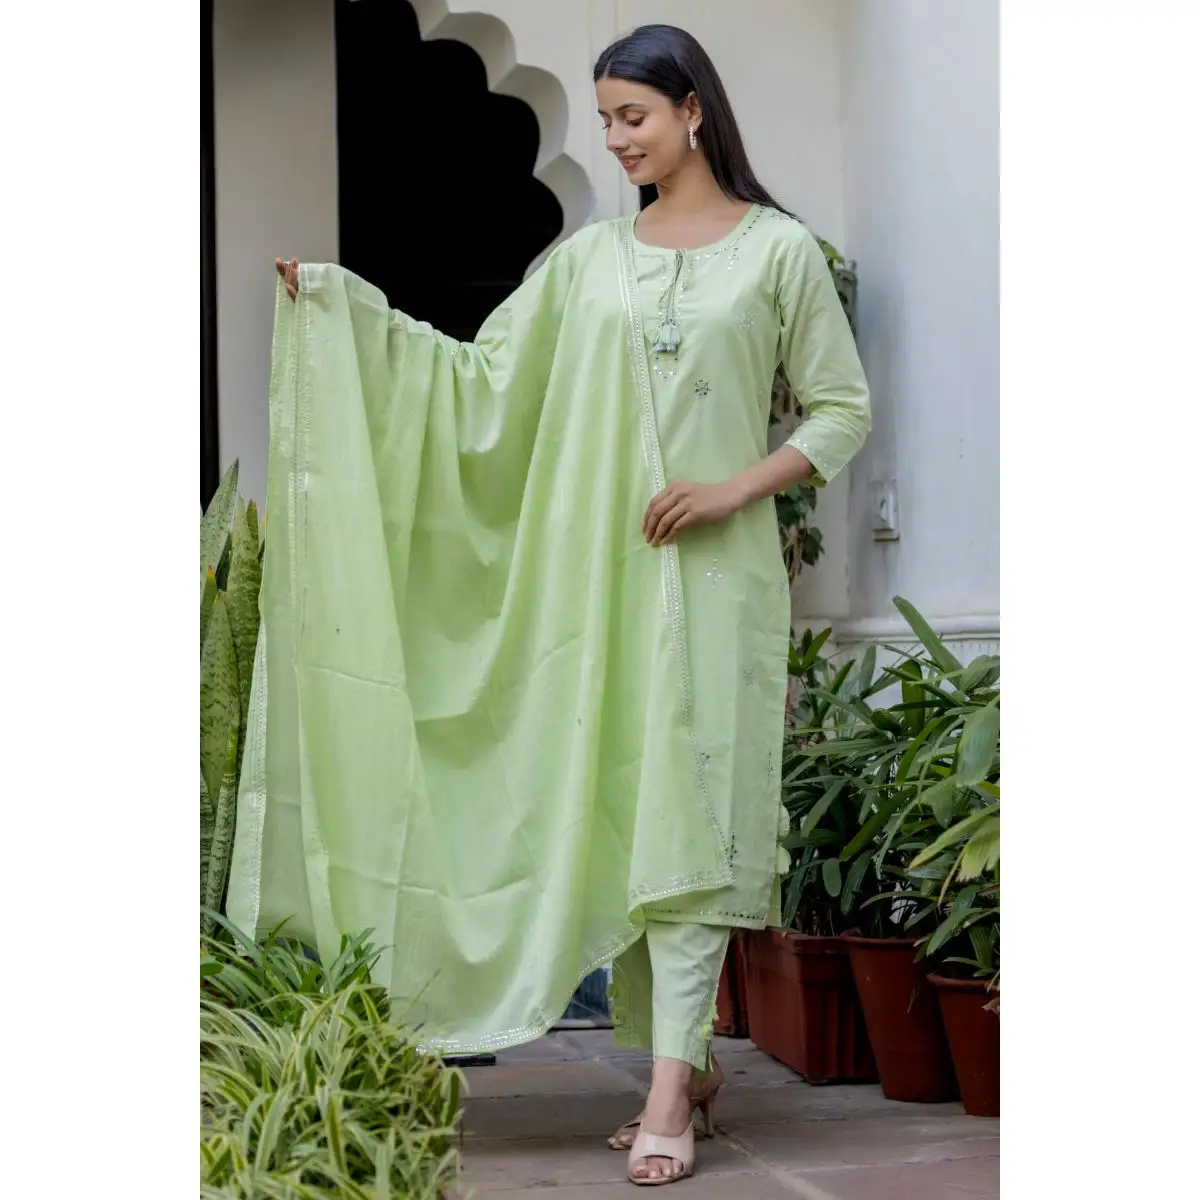 Stylish Green Mirror Embellished Cotton Suit Set for Indian wedding